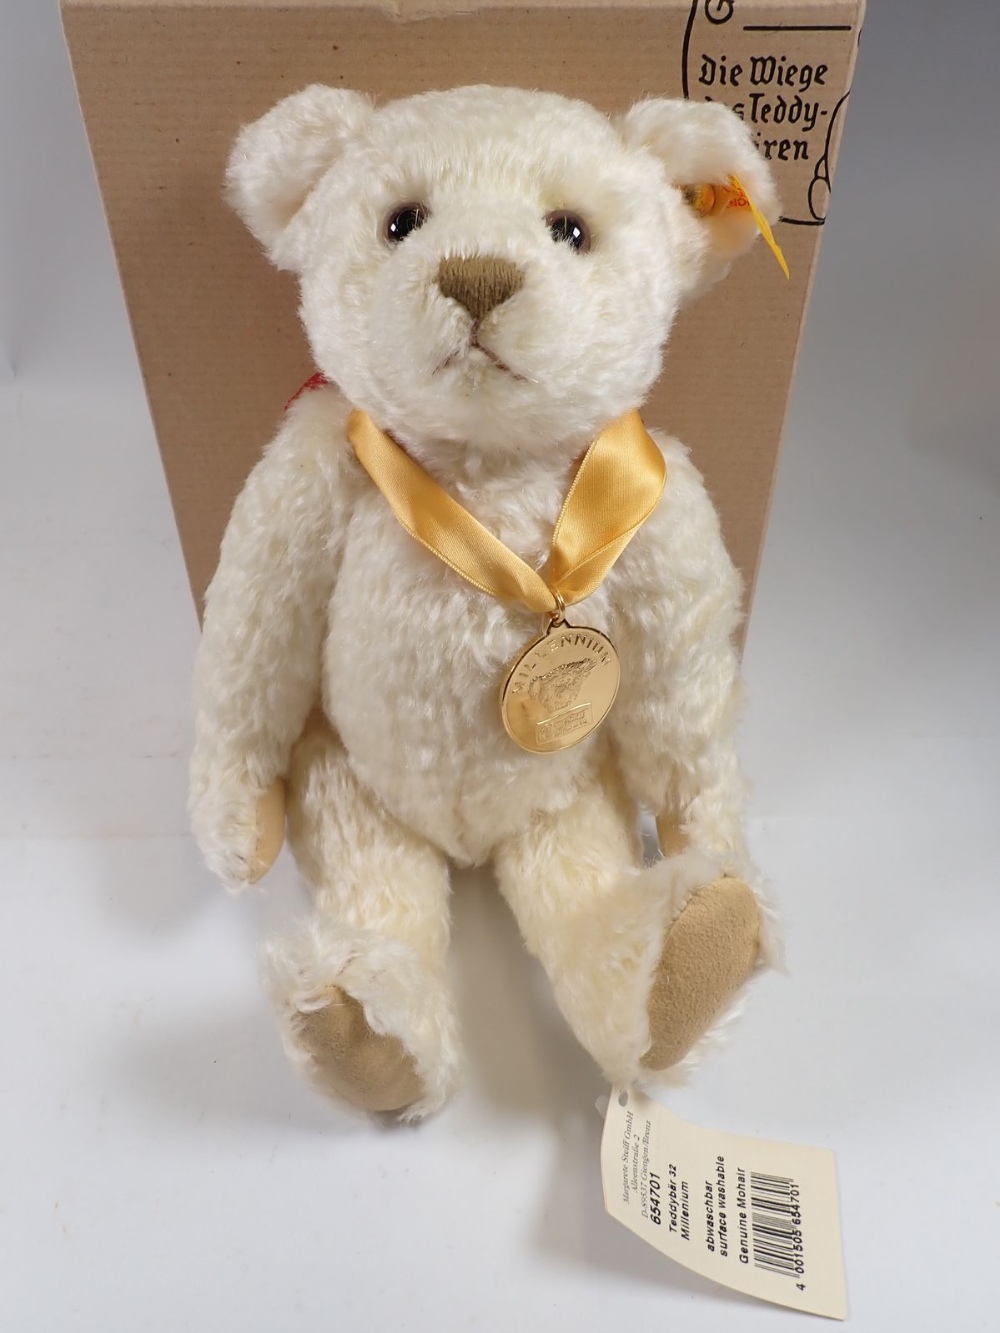 A Steiff Millenium teddy bear boxed - Image 2 of 2